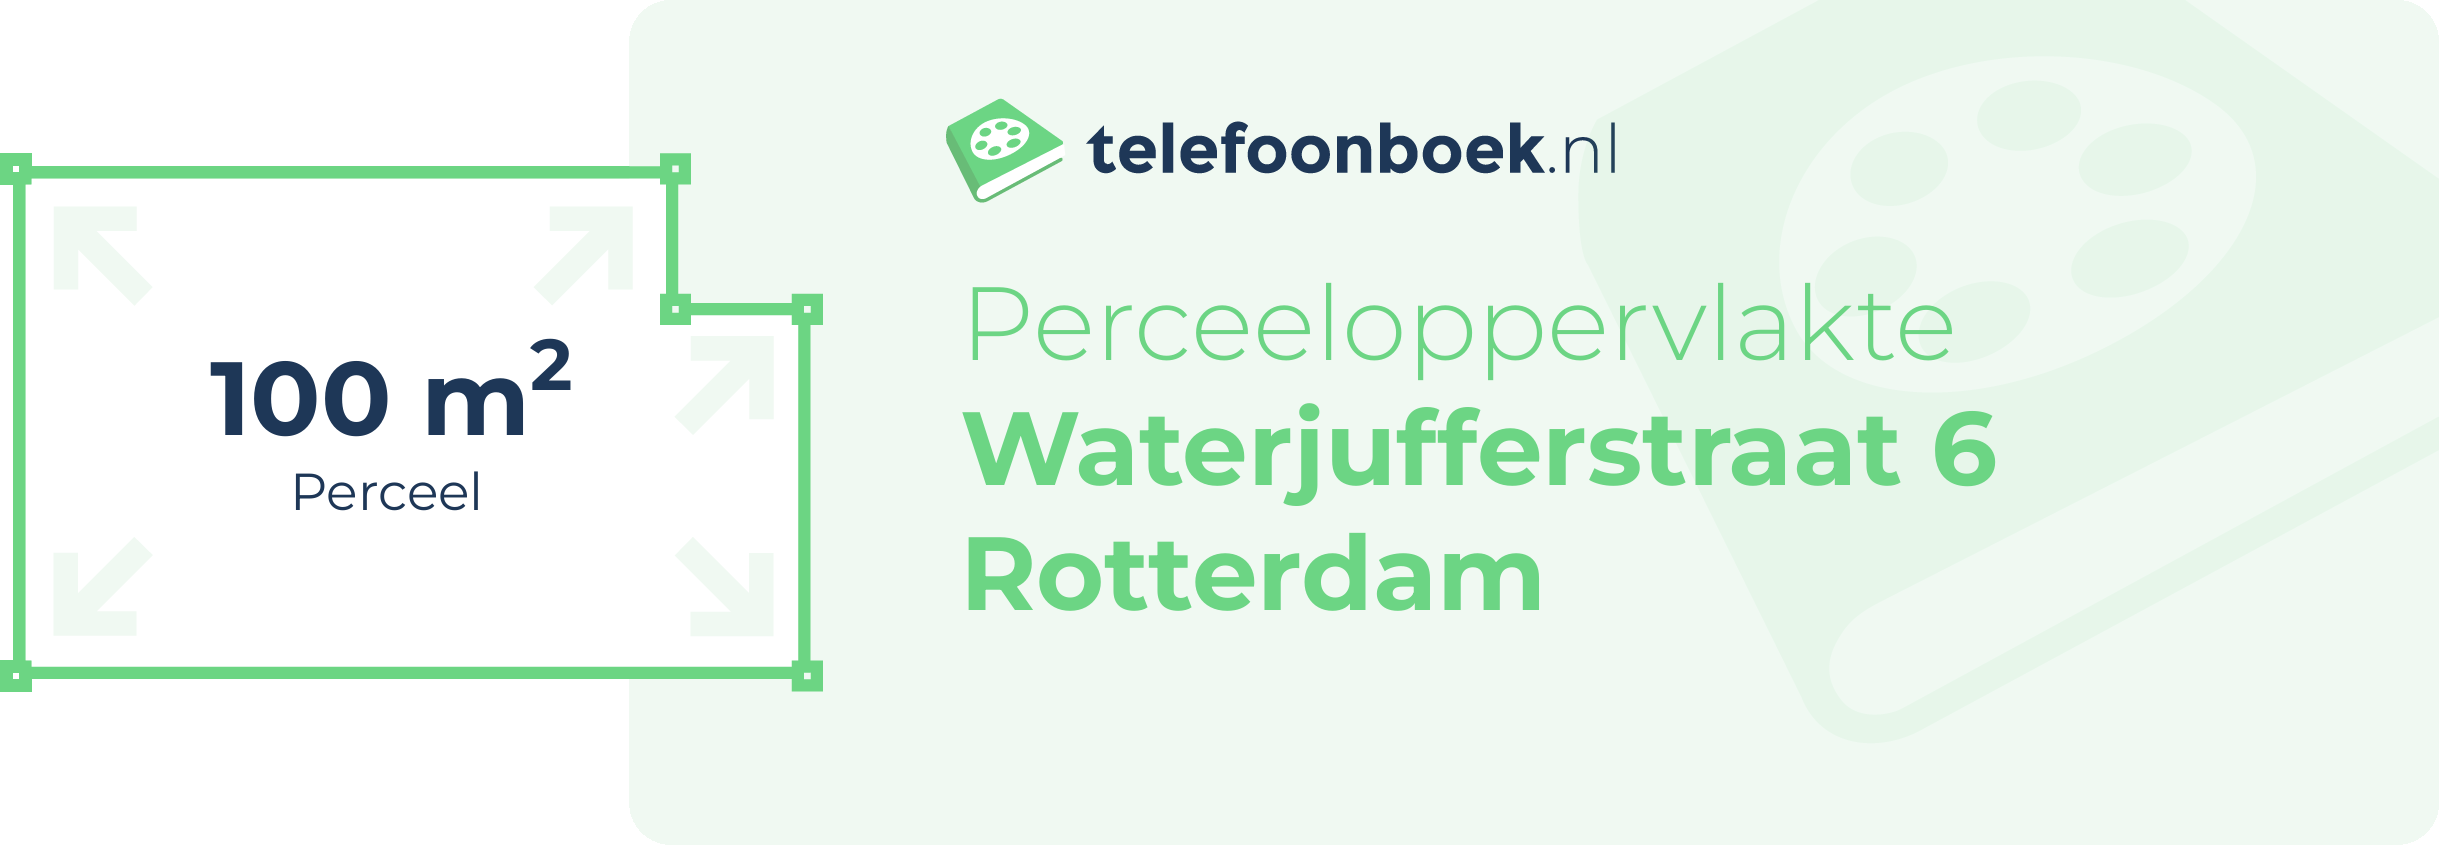 Perceeloppervlakte Waterjufferstraat 6 Rotterdam